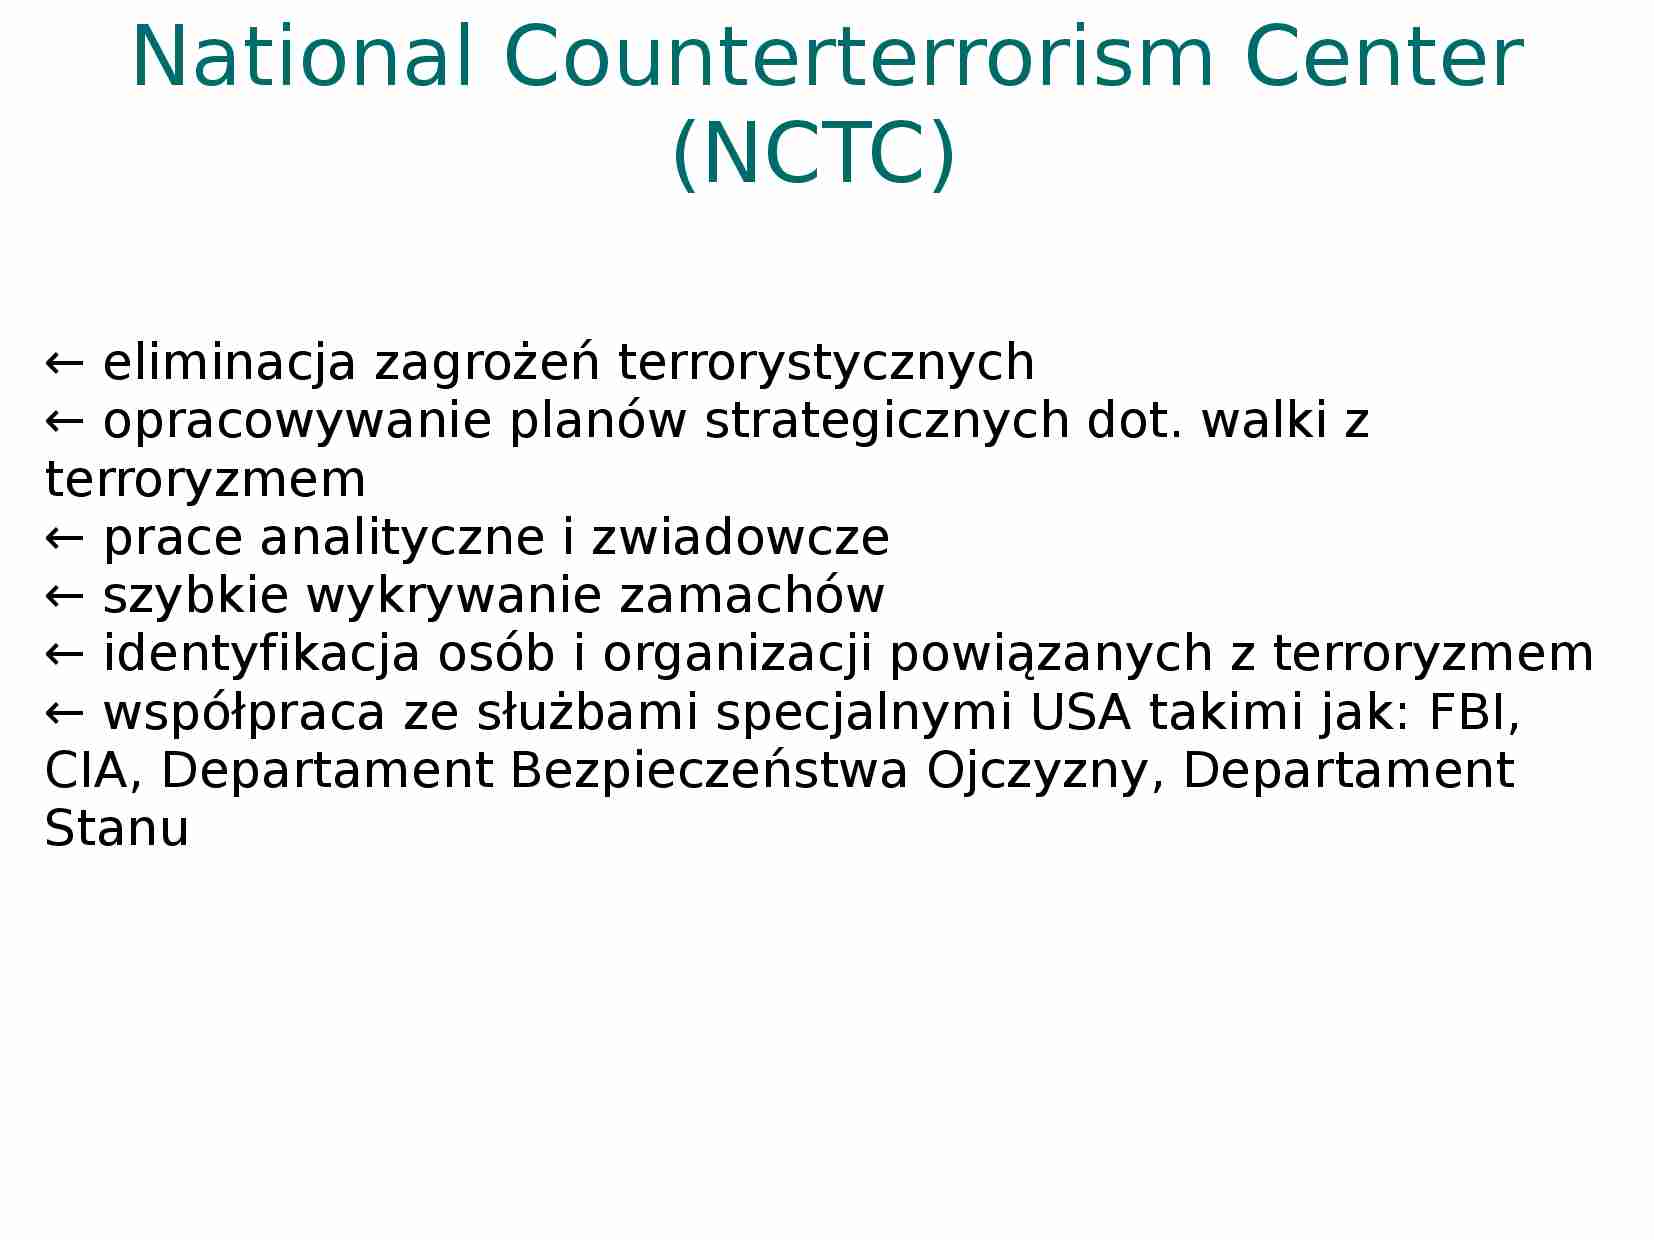 National Counterterrorism Center - prezentacja - strona 1